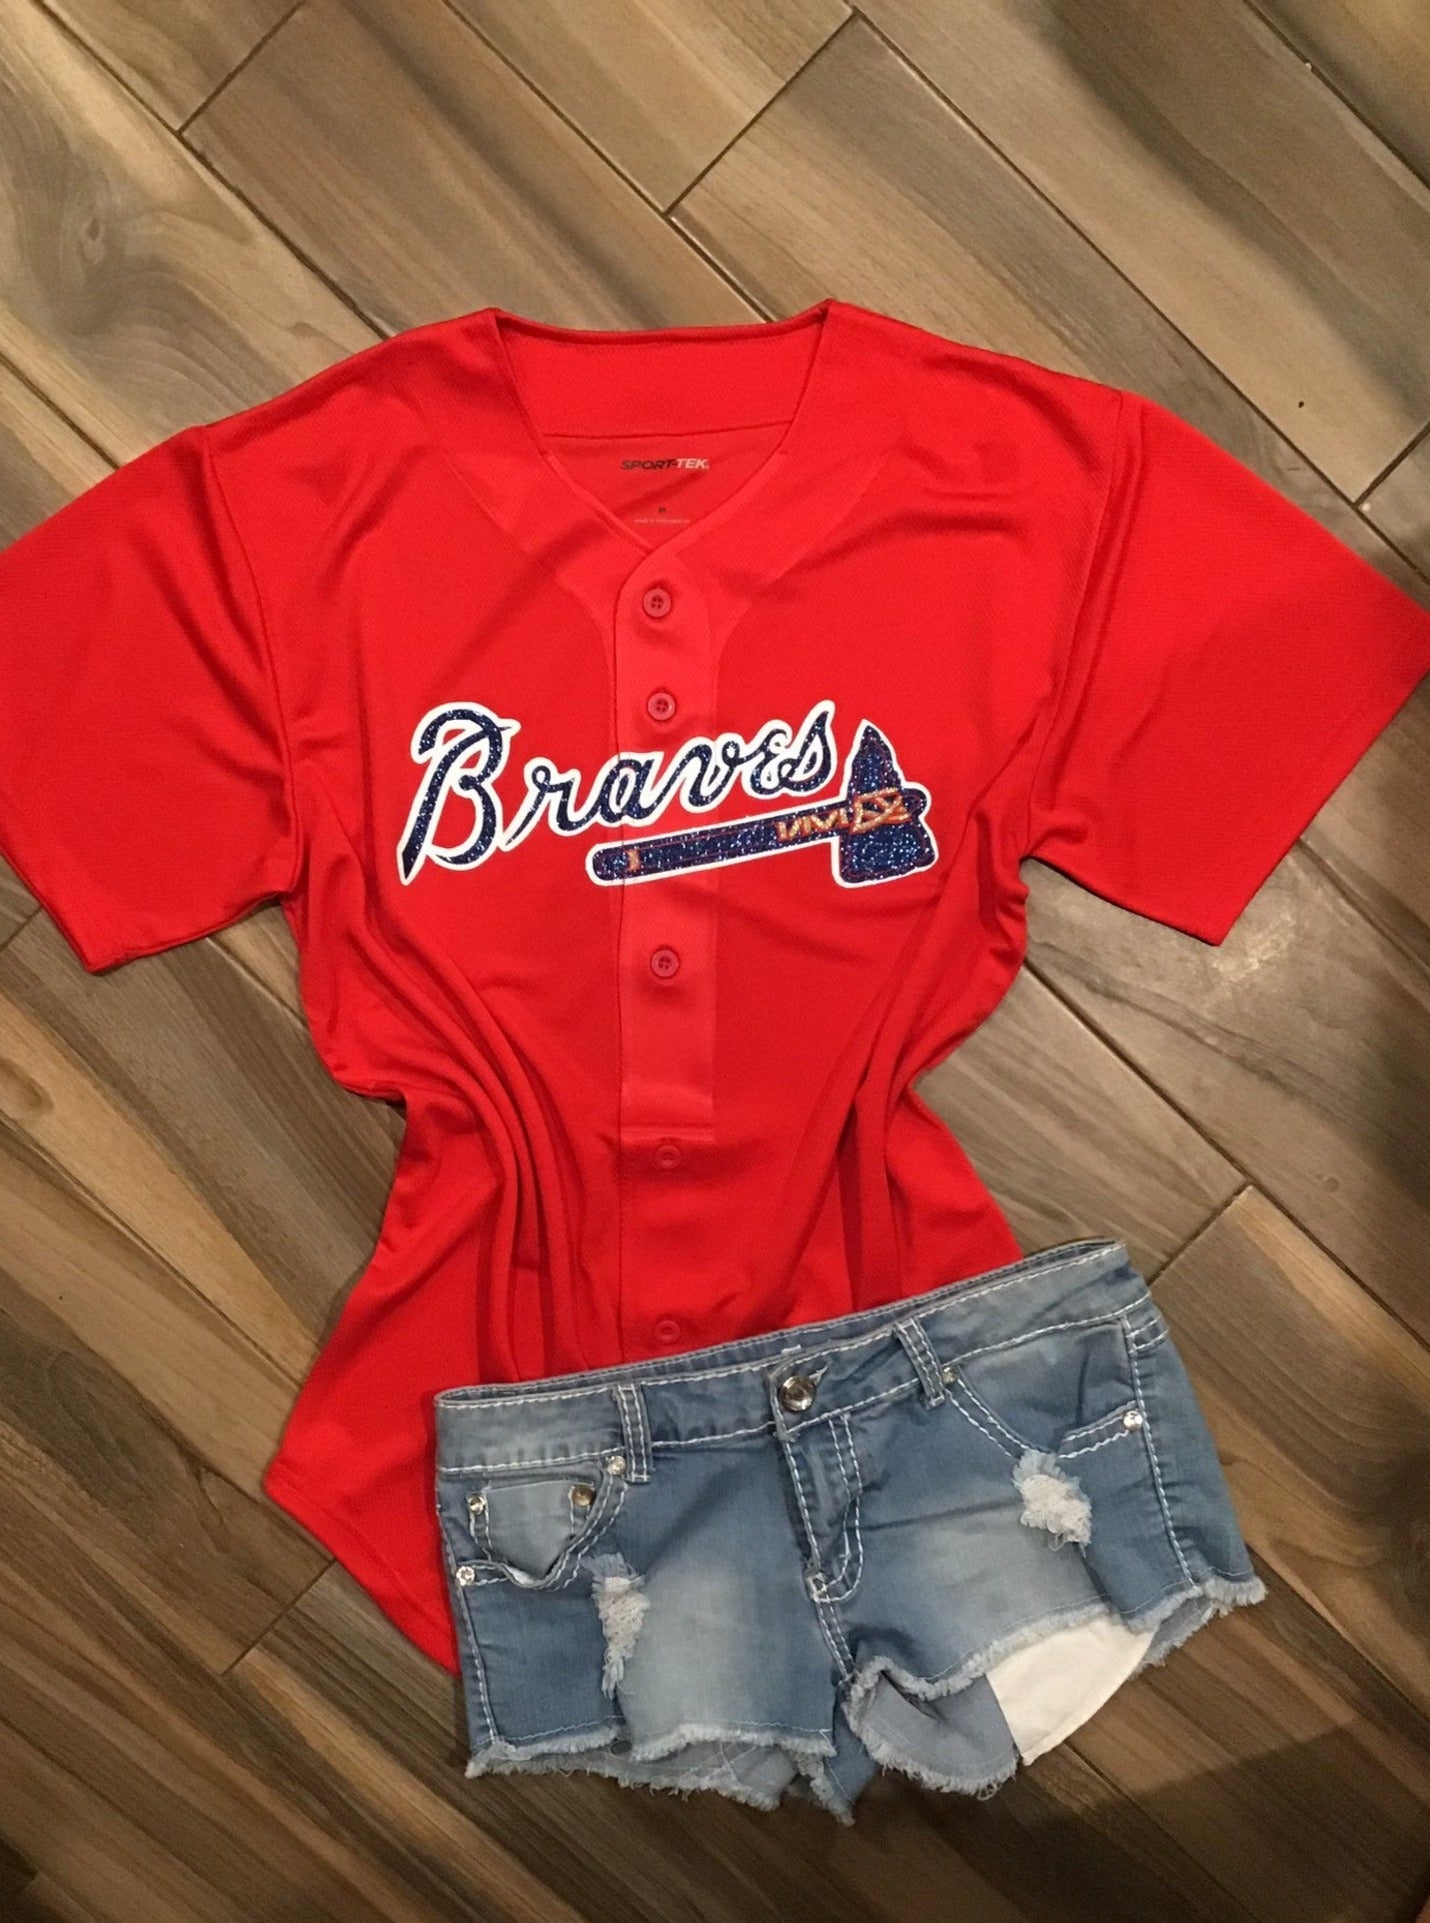 Personalized Atlanta Braves T-Shirt Boys Custom Top Toddler Cotton